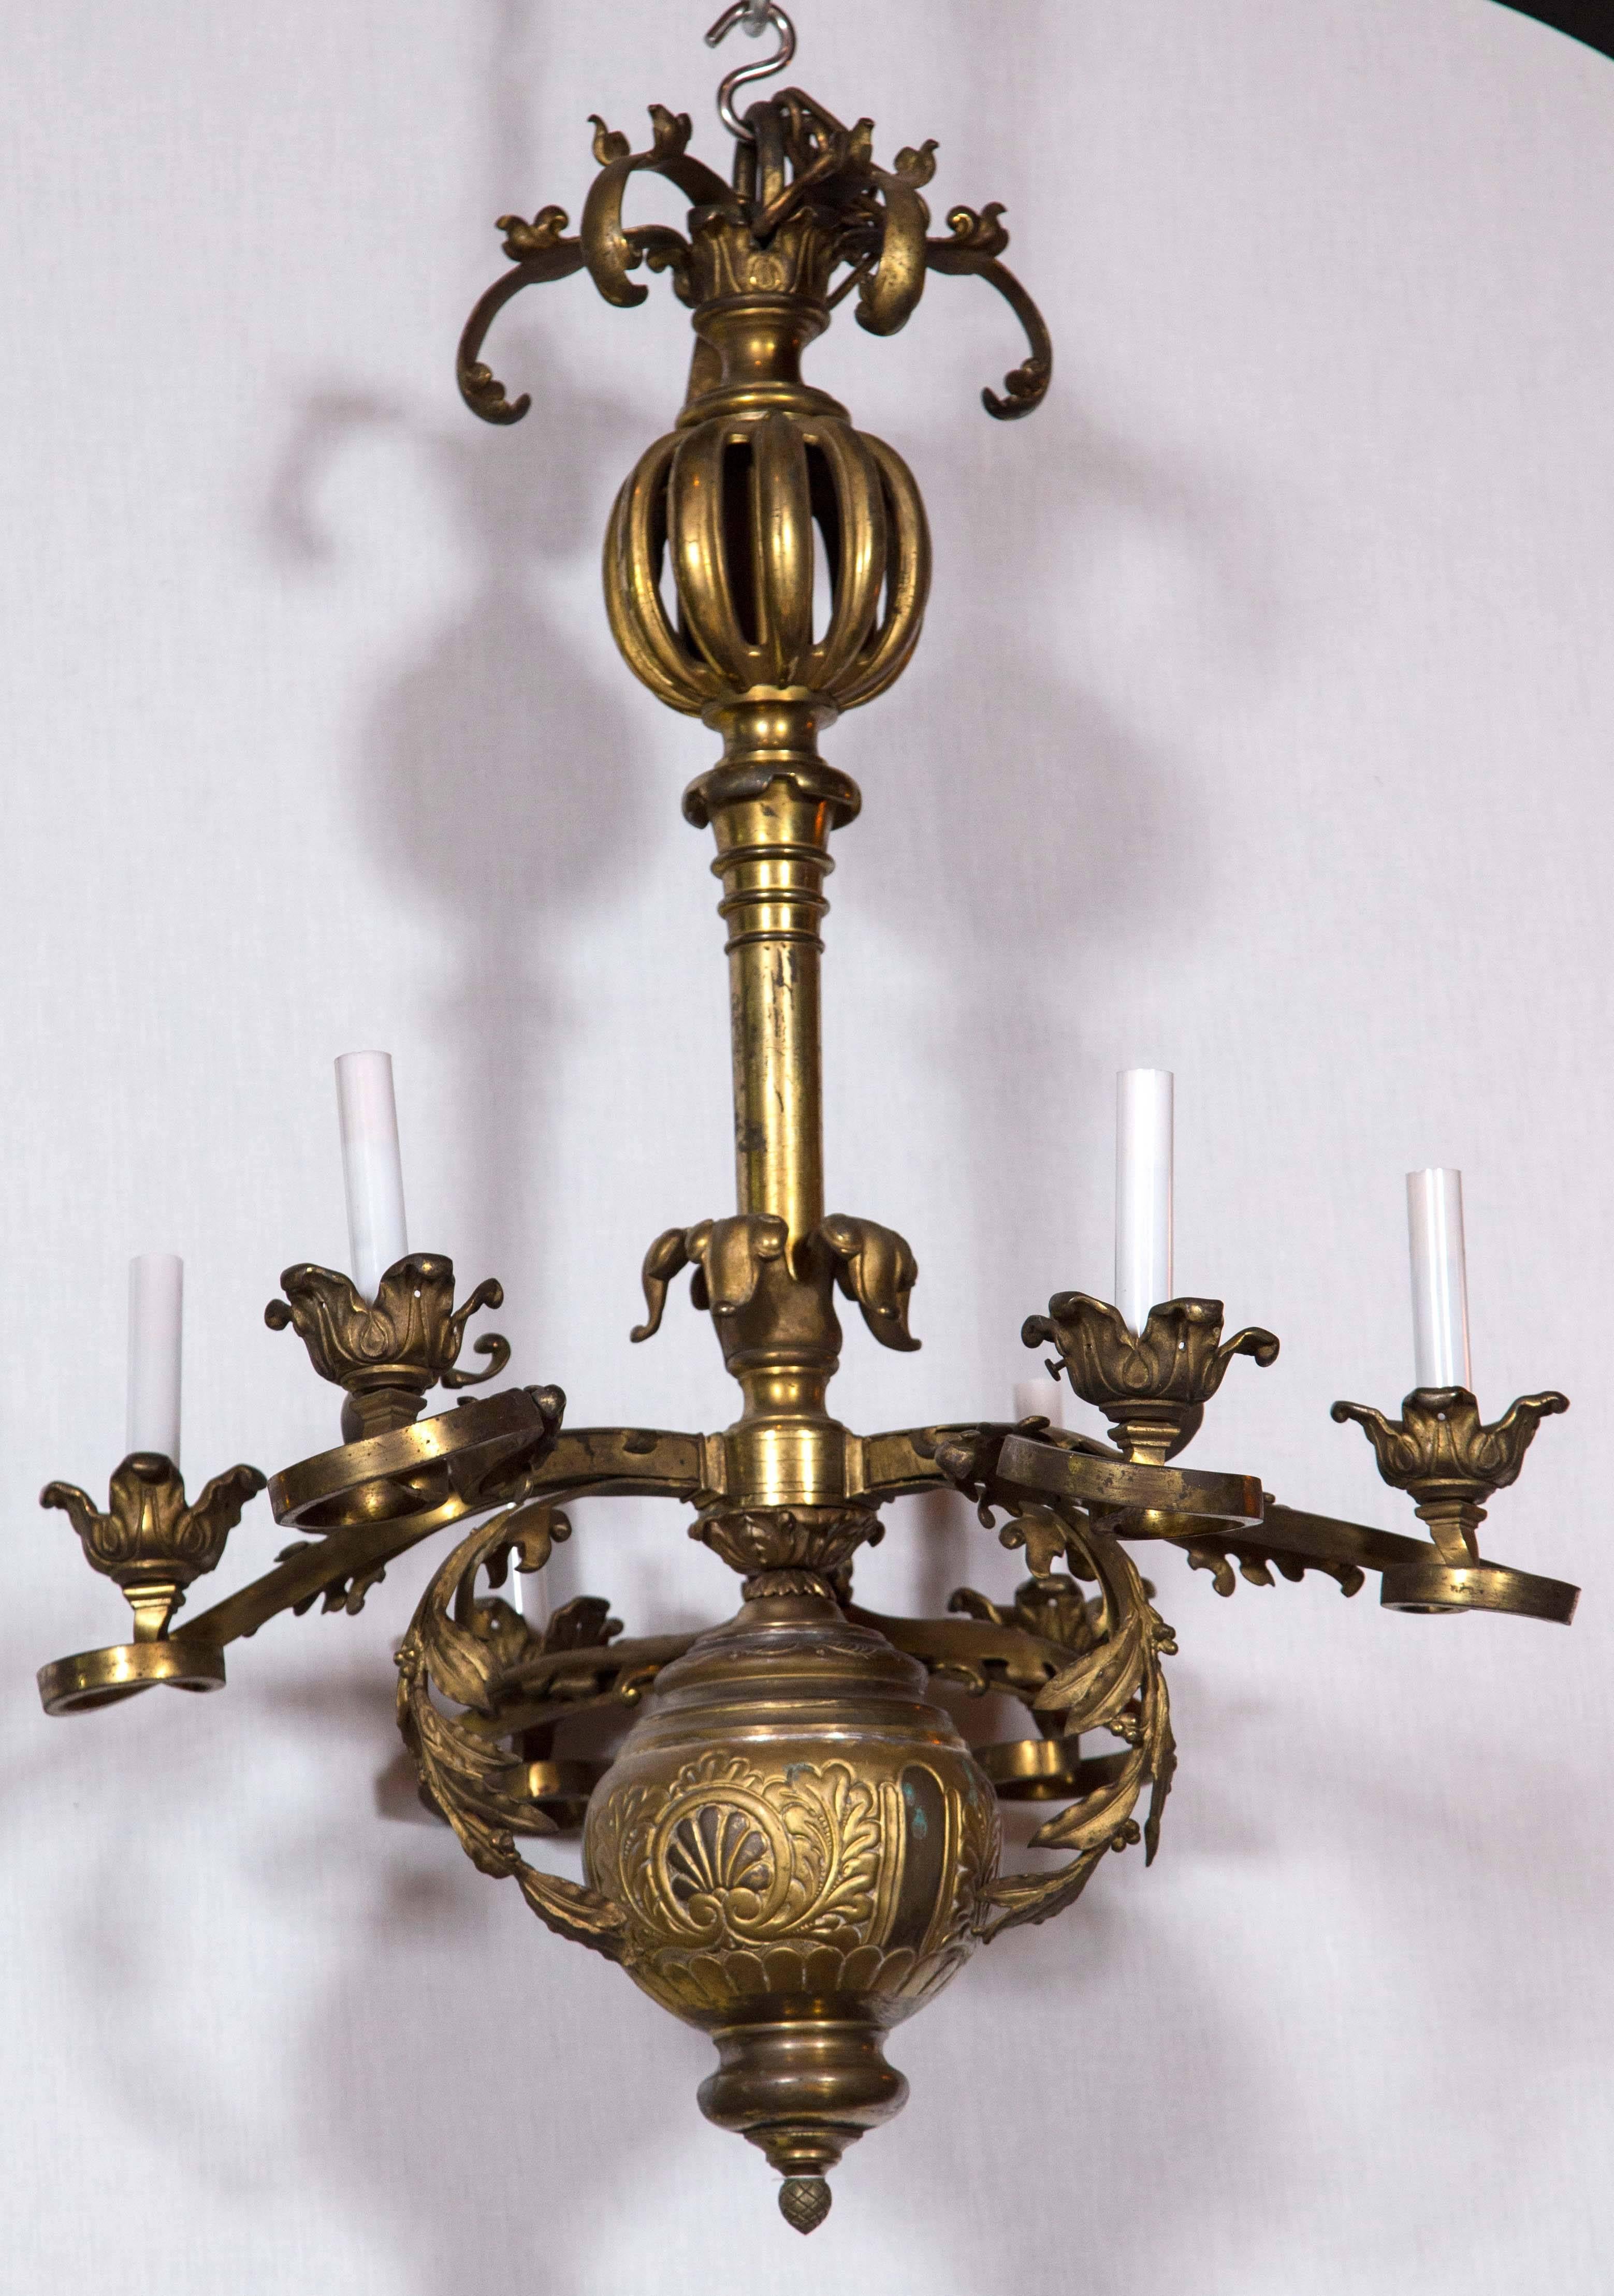 19th century brass chandelier. Six lights, very dramatic.